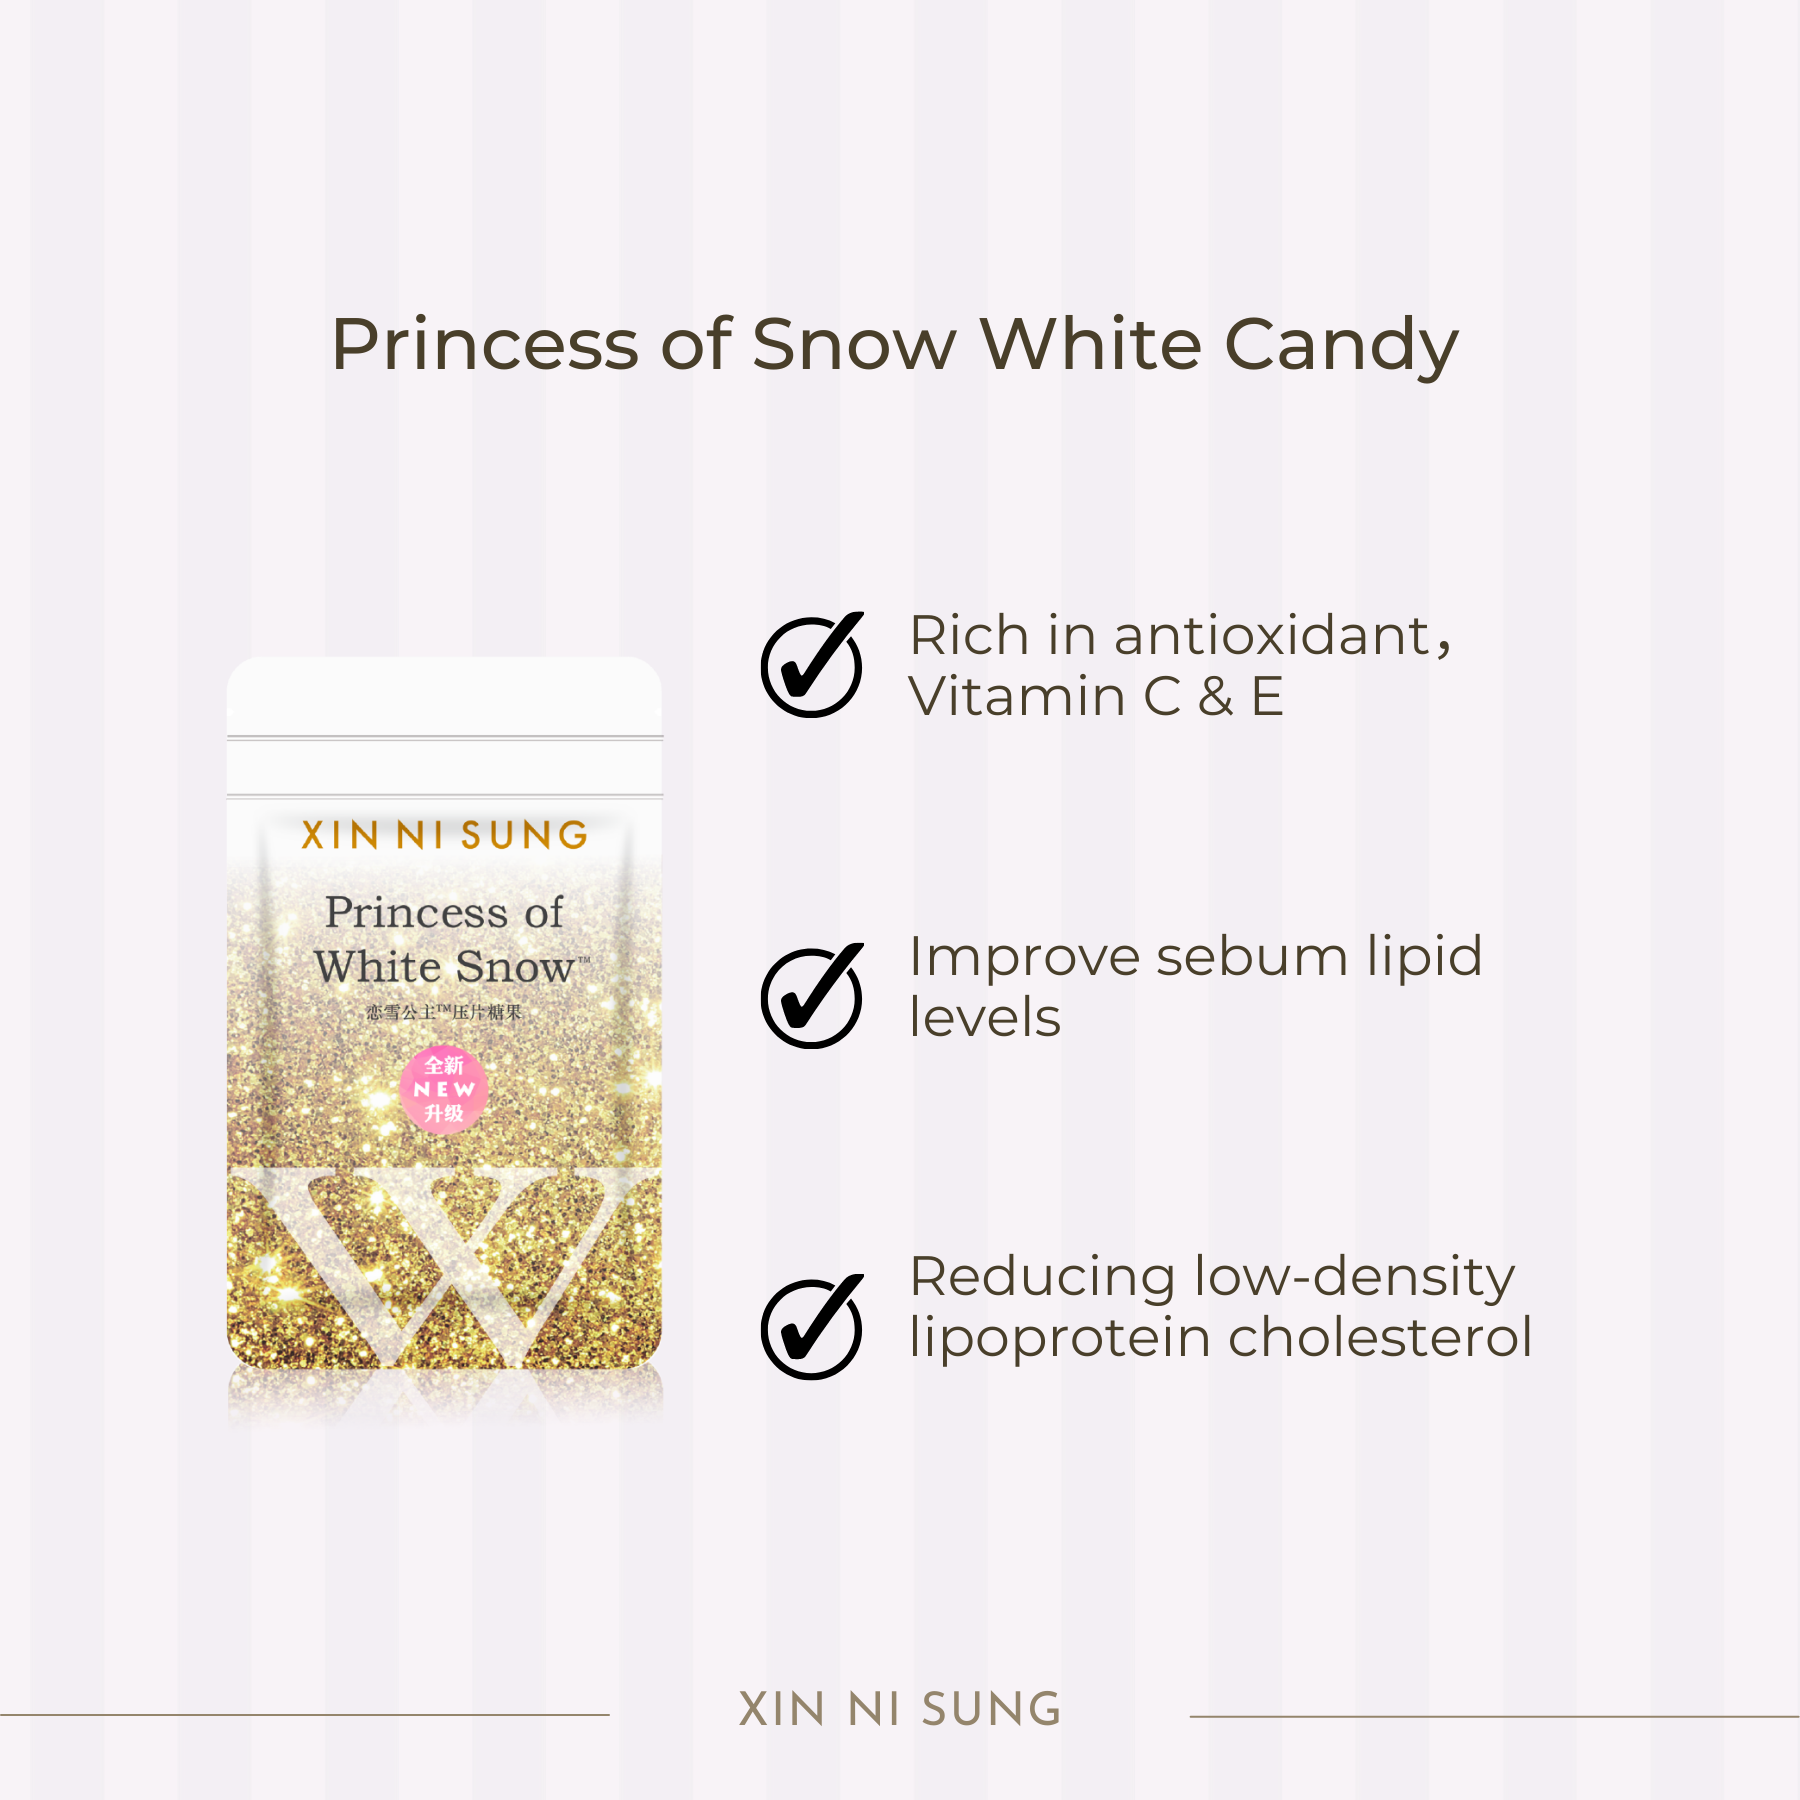 XIN NI SUNG Princess Of White Snow Pressed Candy 恋雪公主压片糖果 33g